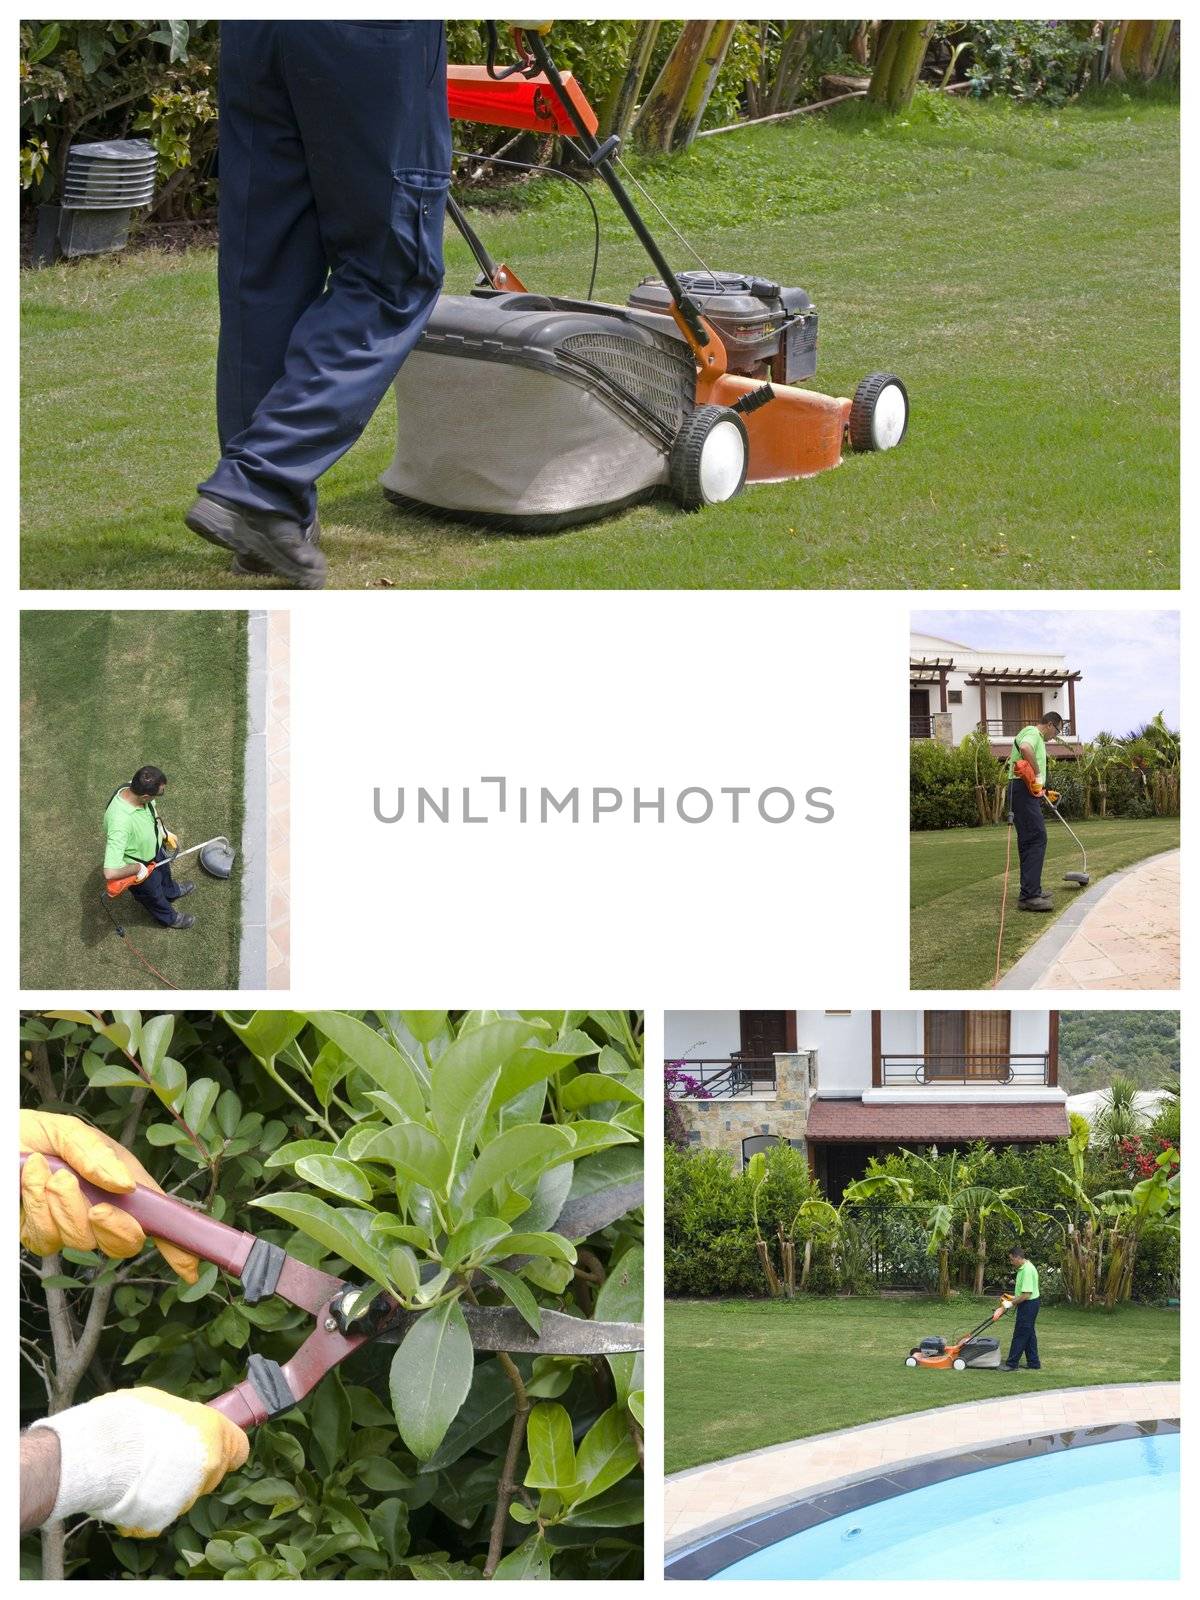 A gardener is cutting grass with machine